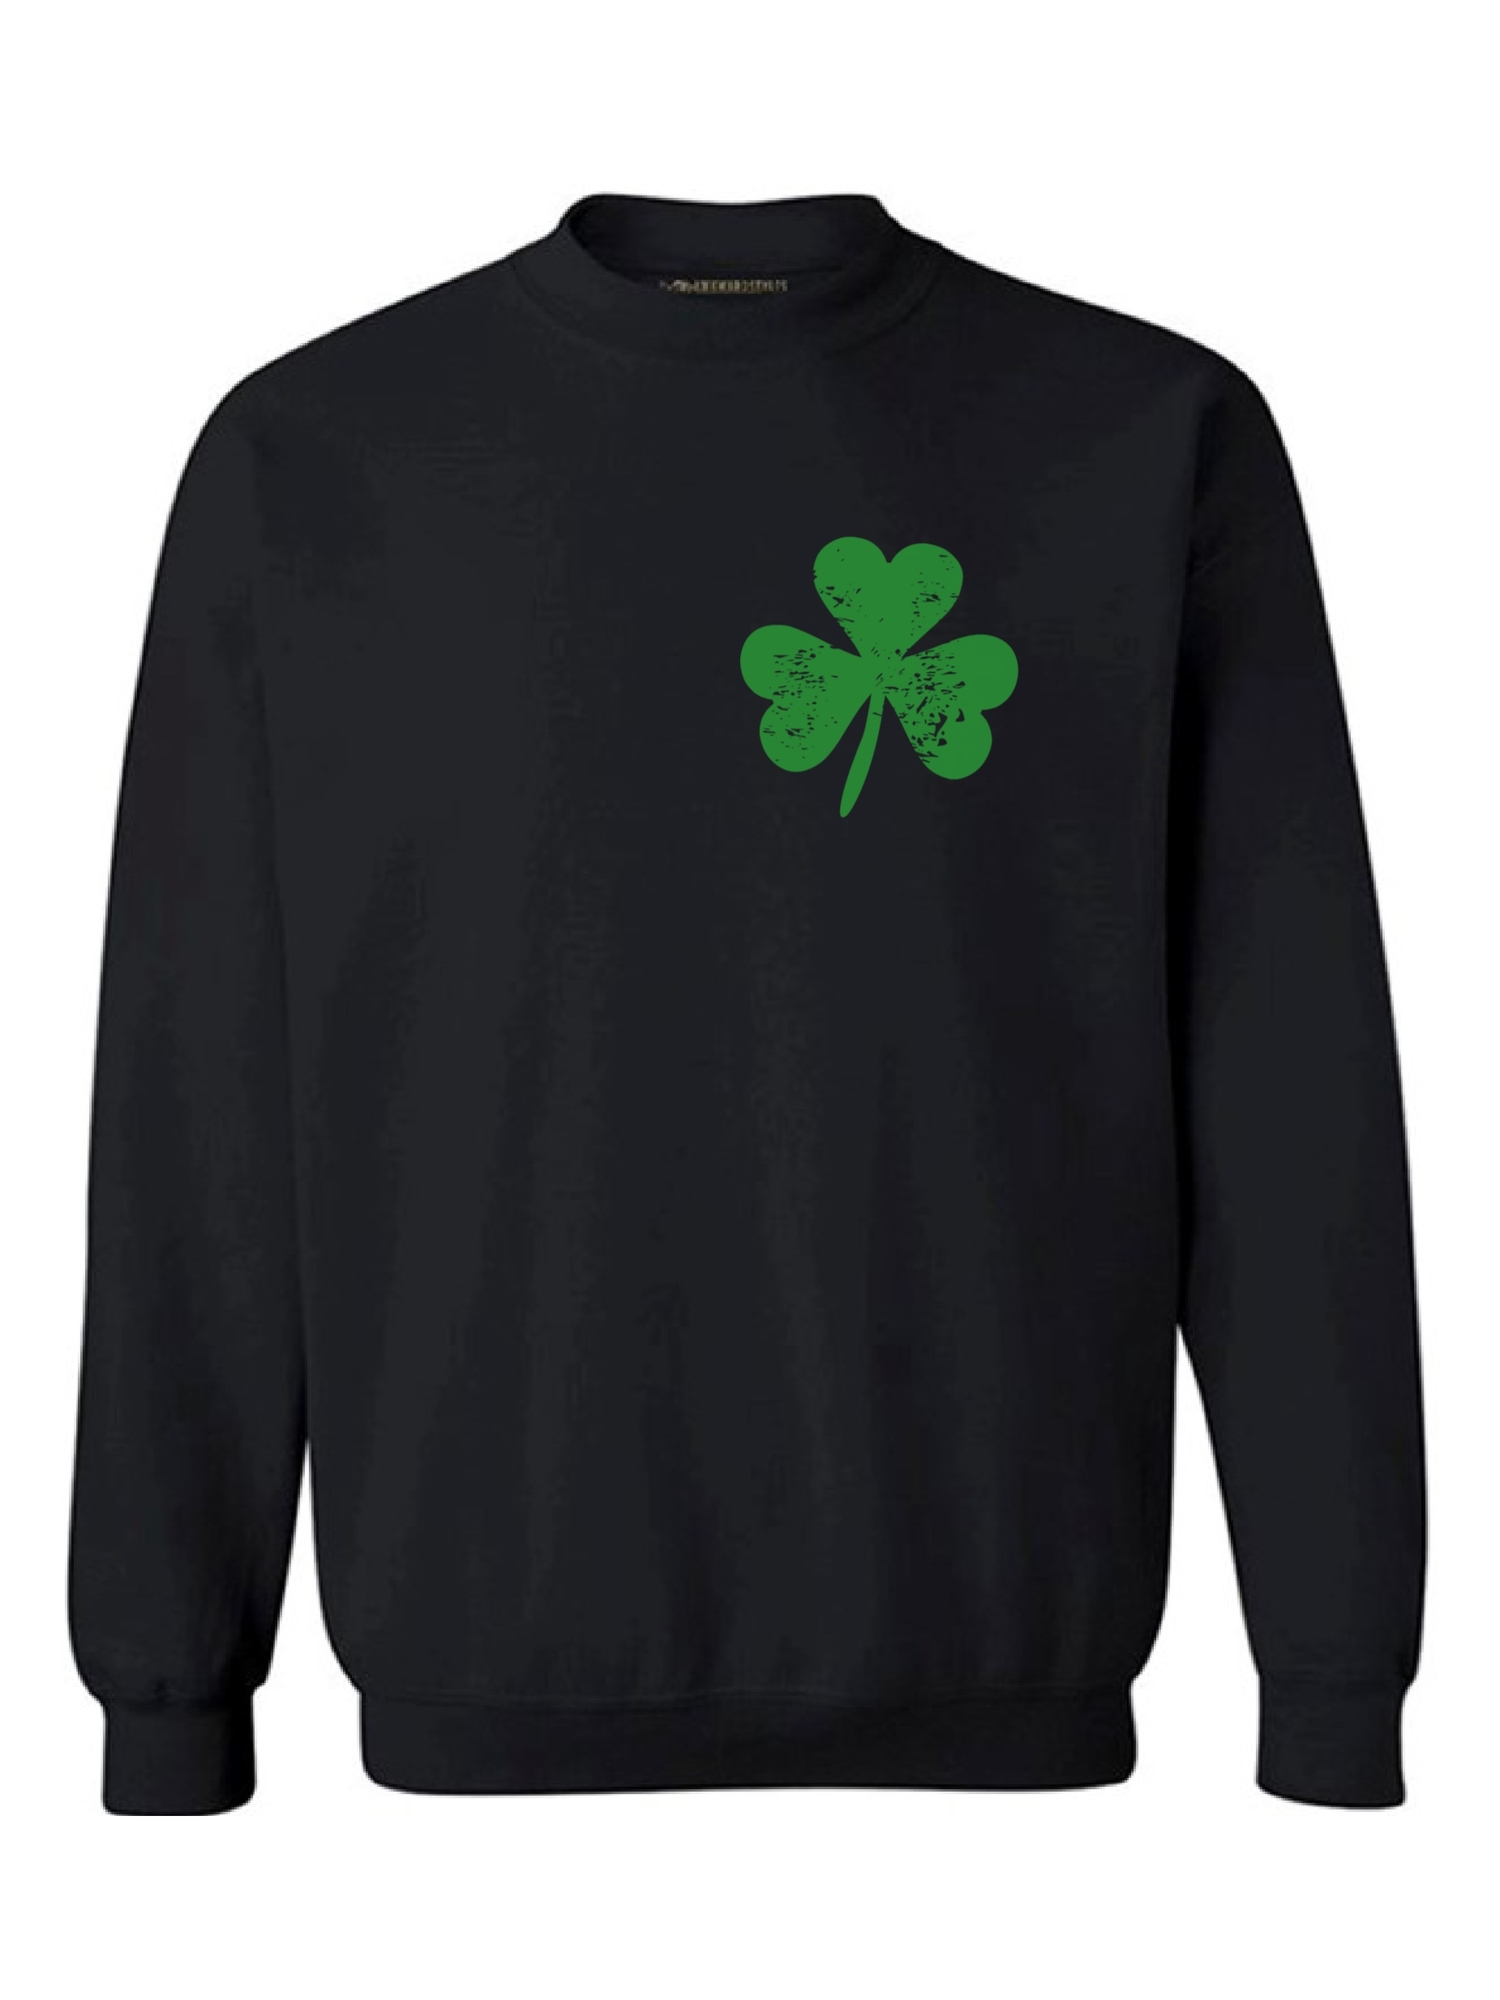 Awkward Styles St. Patricks Day Sweater Irish Clover Pocket Sweatshirt Proud Irish Sweatshirt for Men & Women Lucky Shamrock Sweater St Paddy's Day Irish Gifts Irish Pride St Patricks Sweater - image 1 of 5